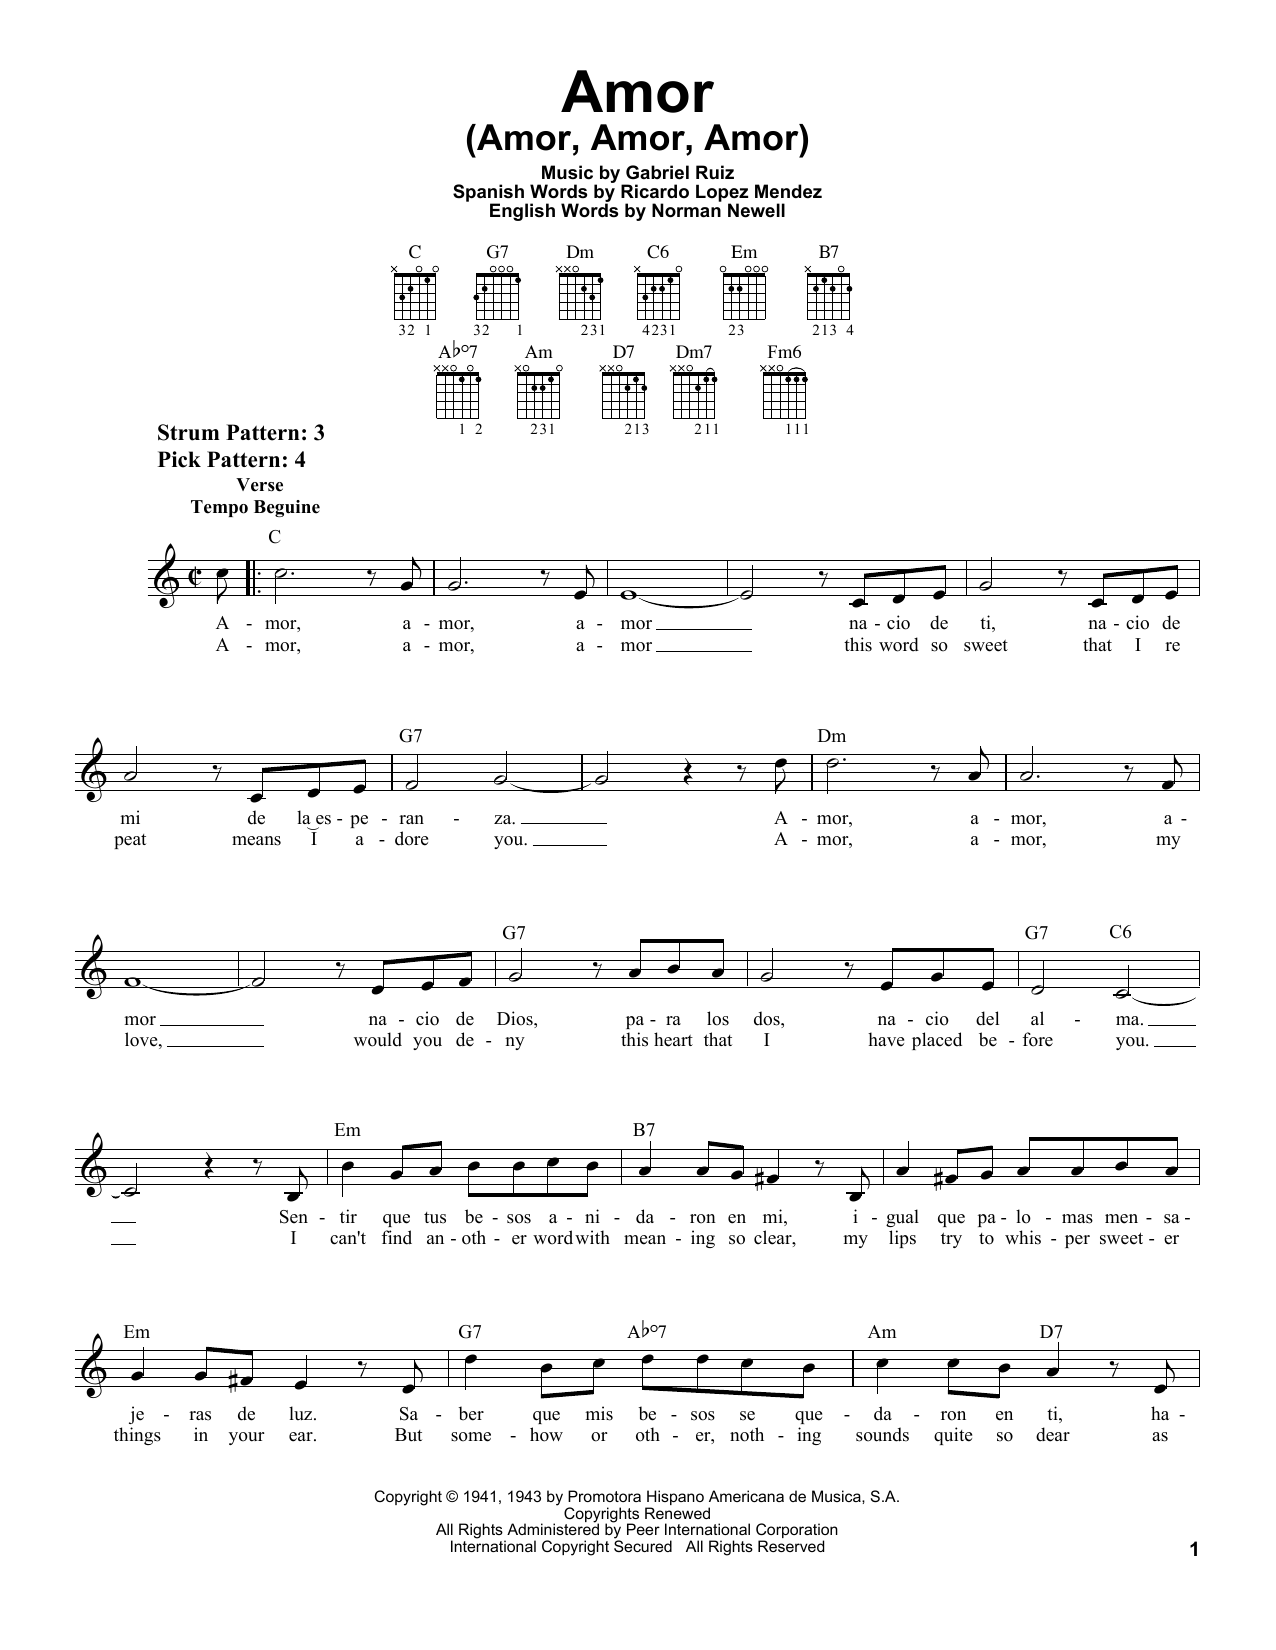 Gabriel Ruiz Amor (Amor, Amor, Amor) Sheet Music Notes & Chords for Piano (Big Notes) - Download or Print PDF